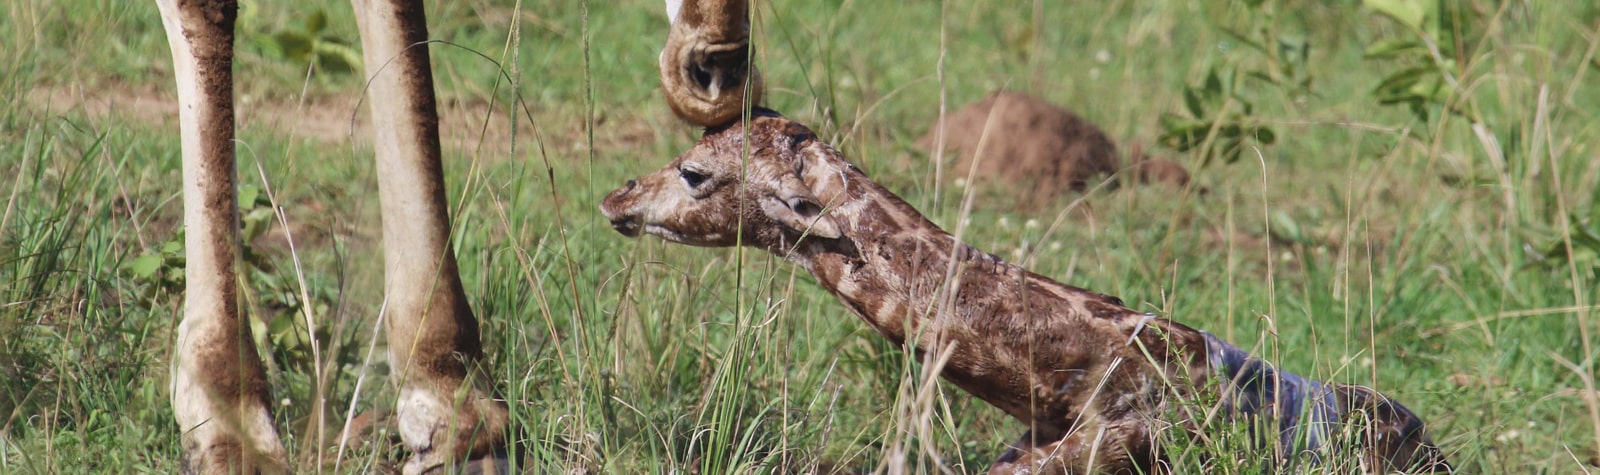 Nubian’s giraffe birth at Murchison Falls National Park